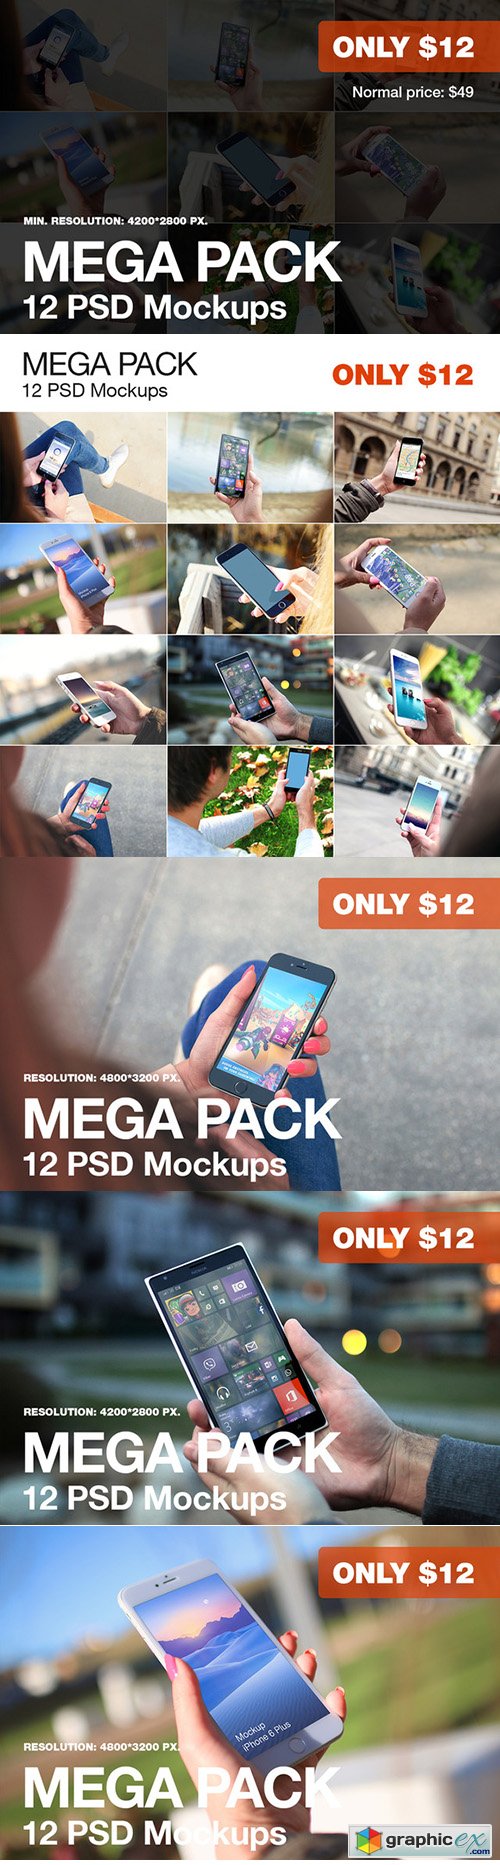  12 PSD Mockups of Mobile phones